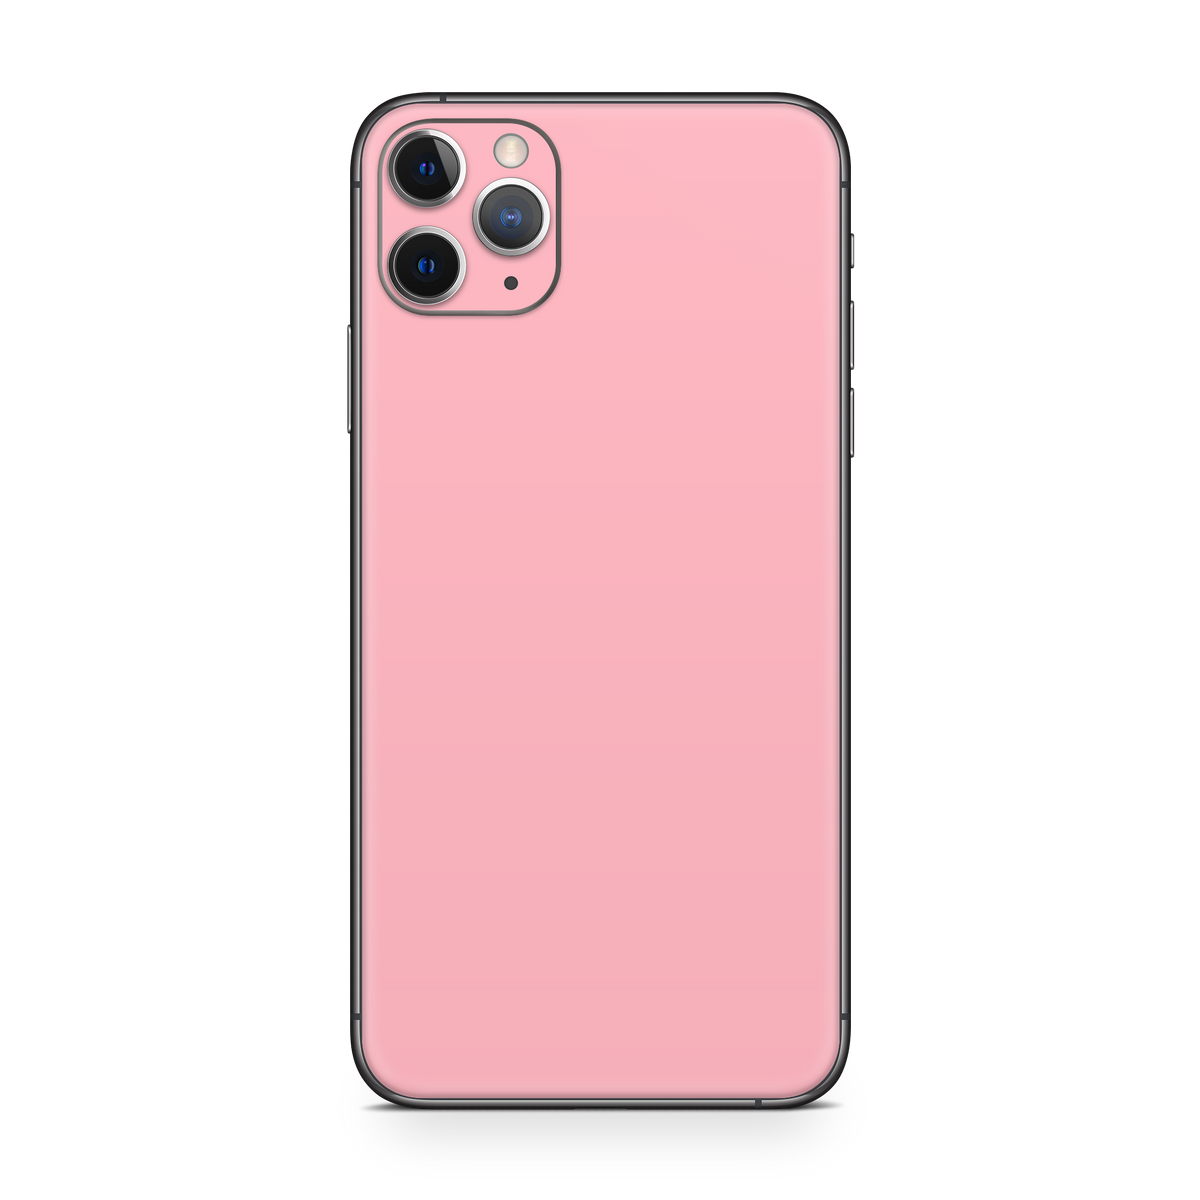 Apple iPhone 11 Pro max Pastel Pink Skin